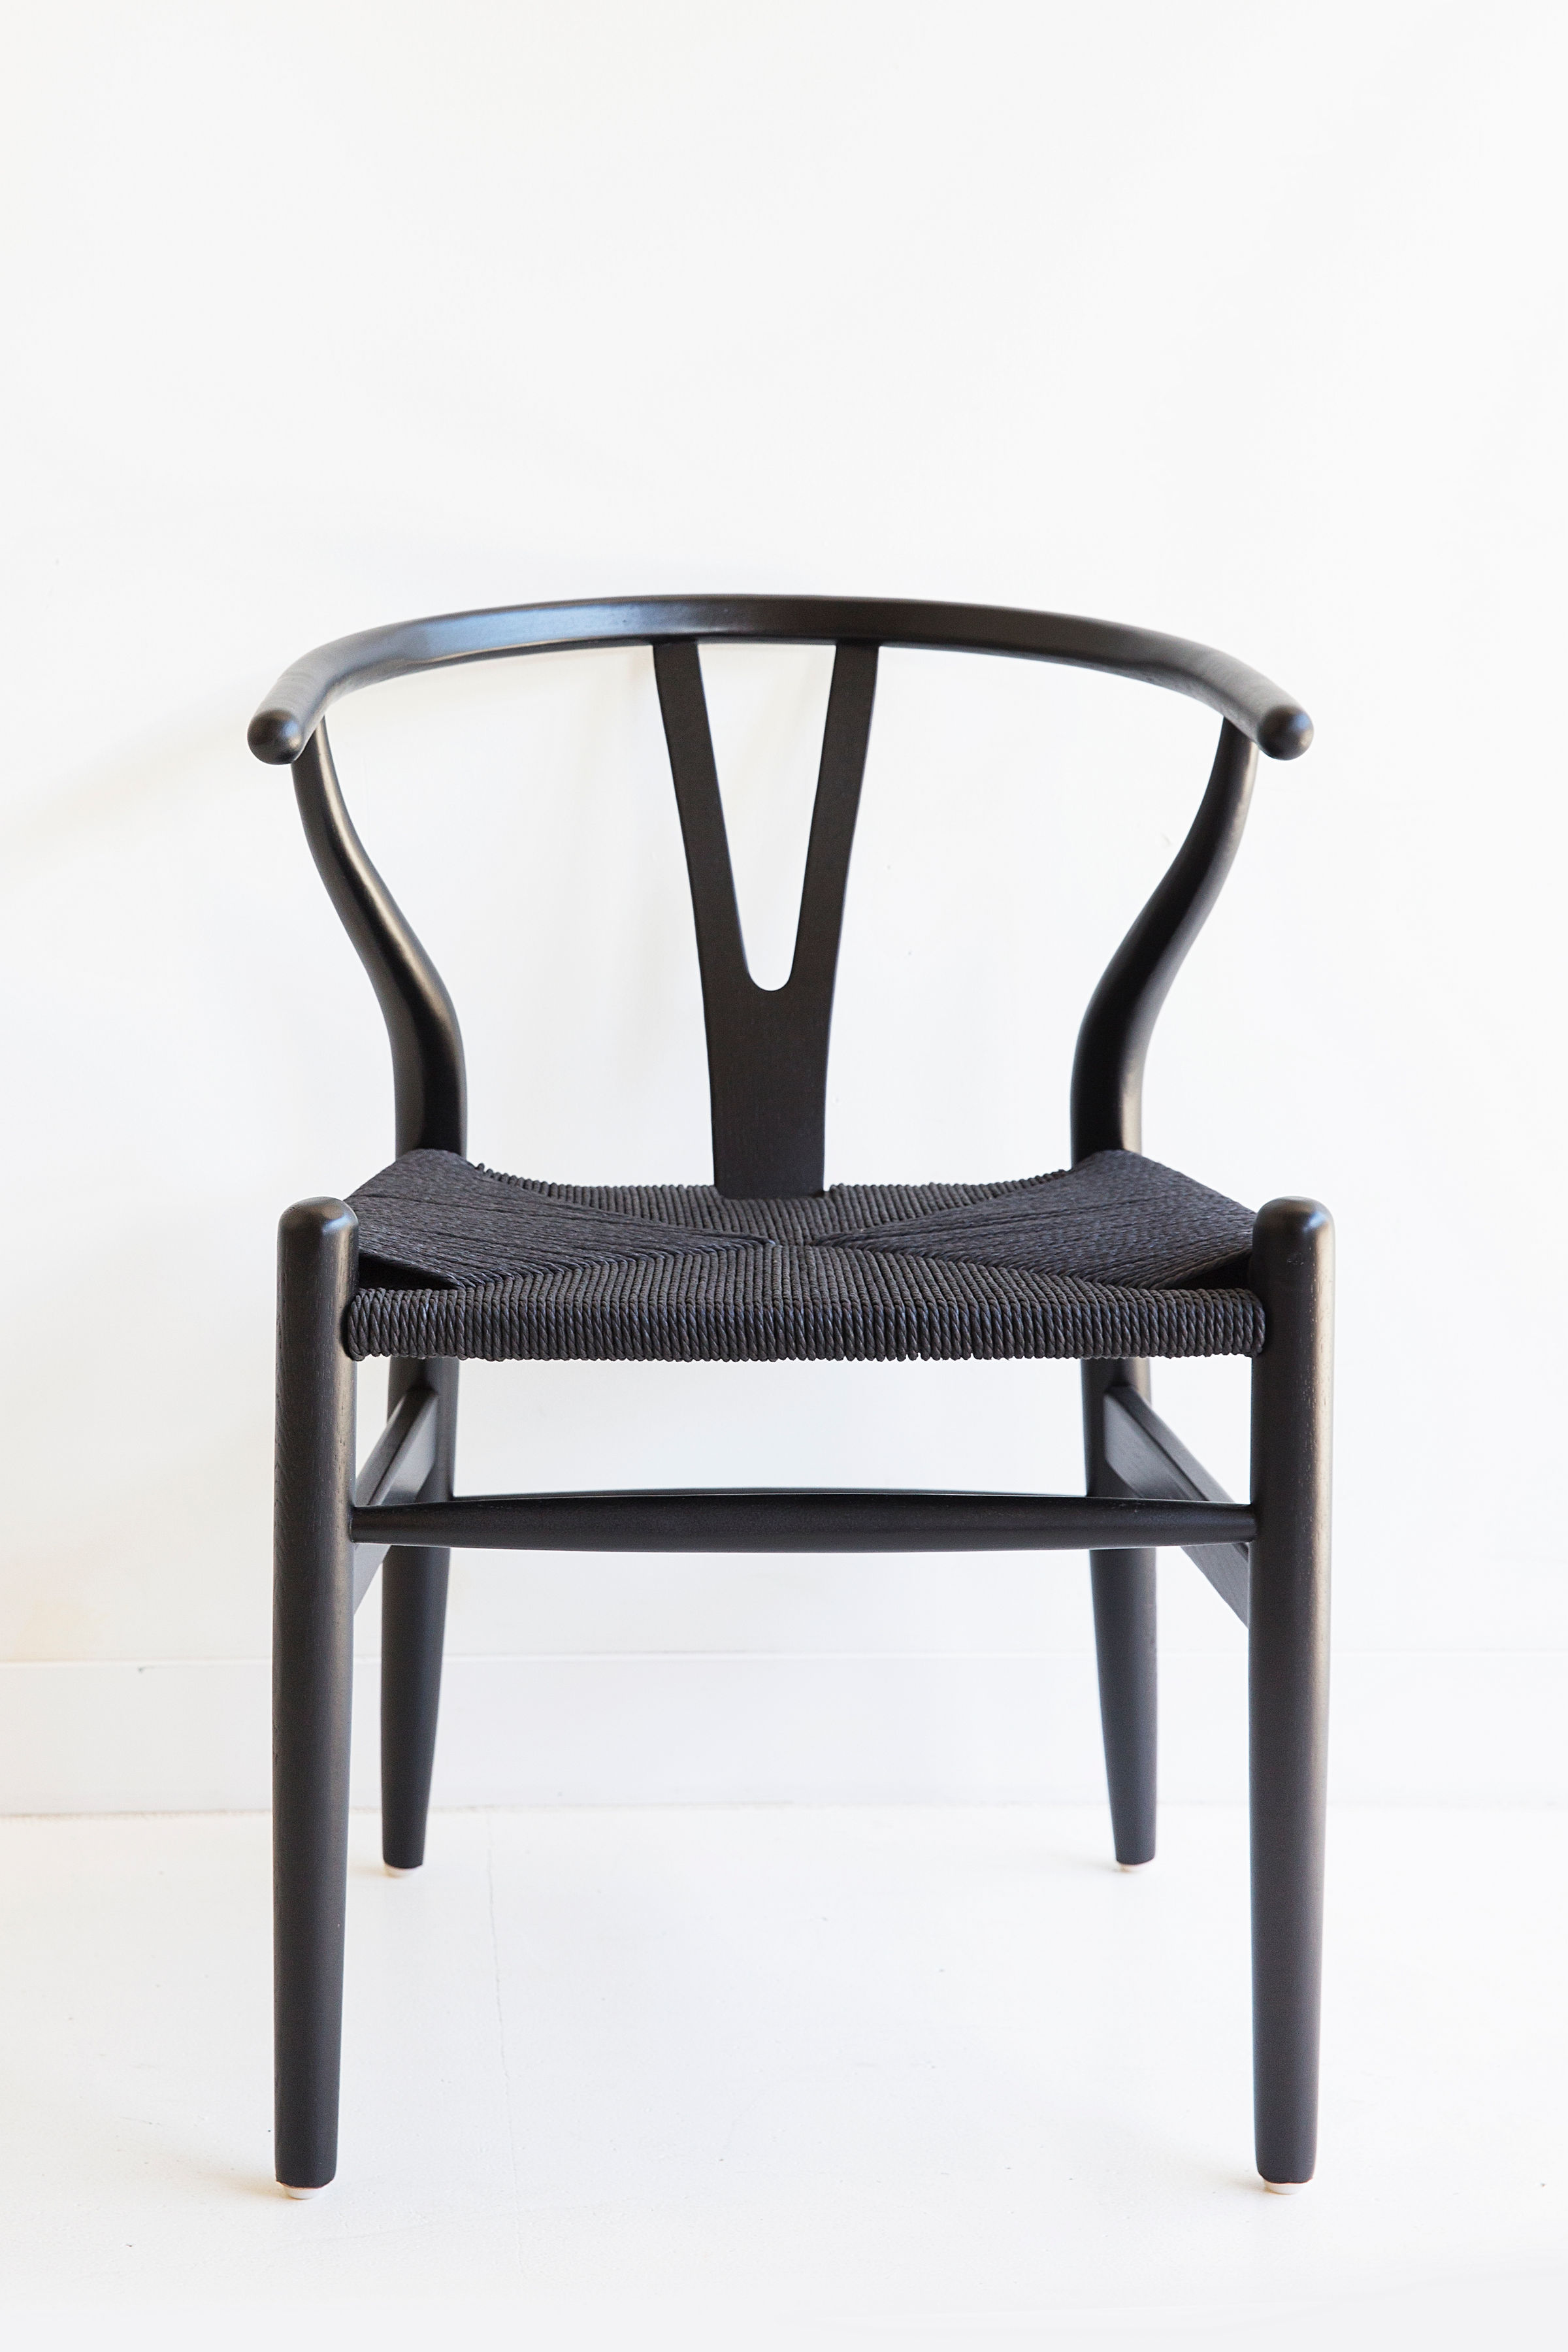  Wishbone Chair Replica Black for Simple Design